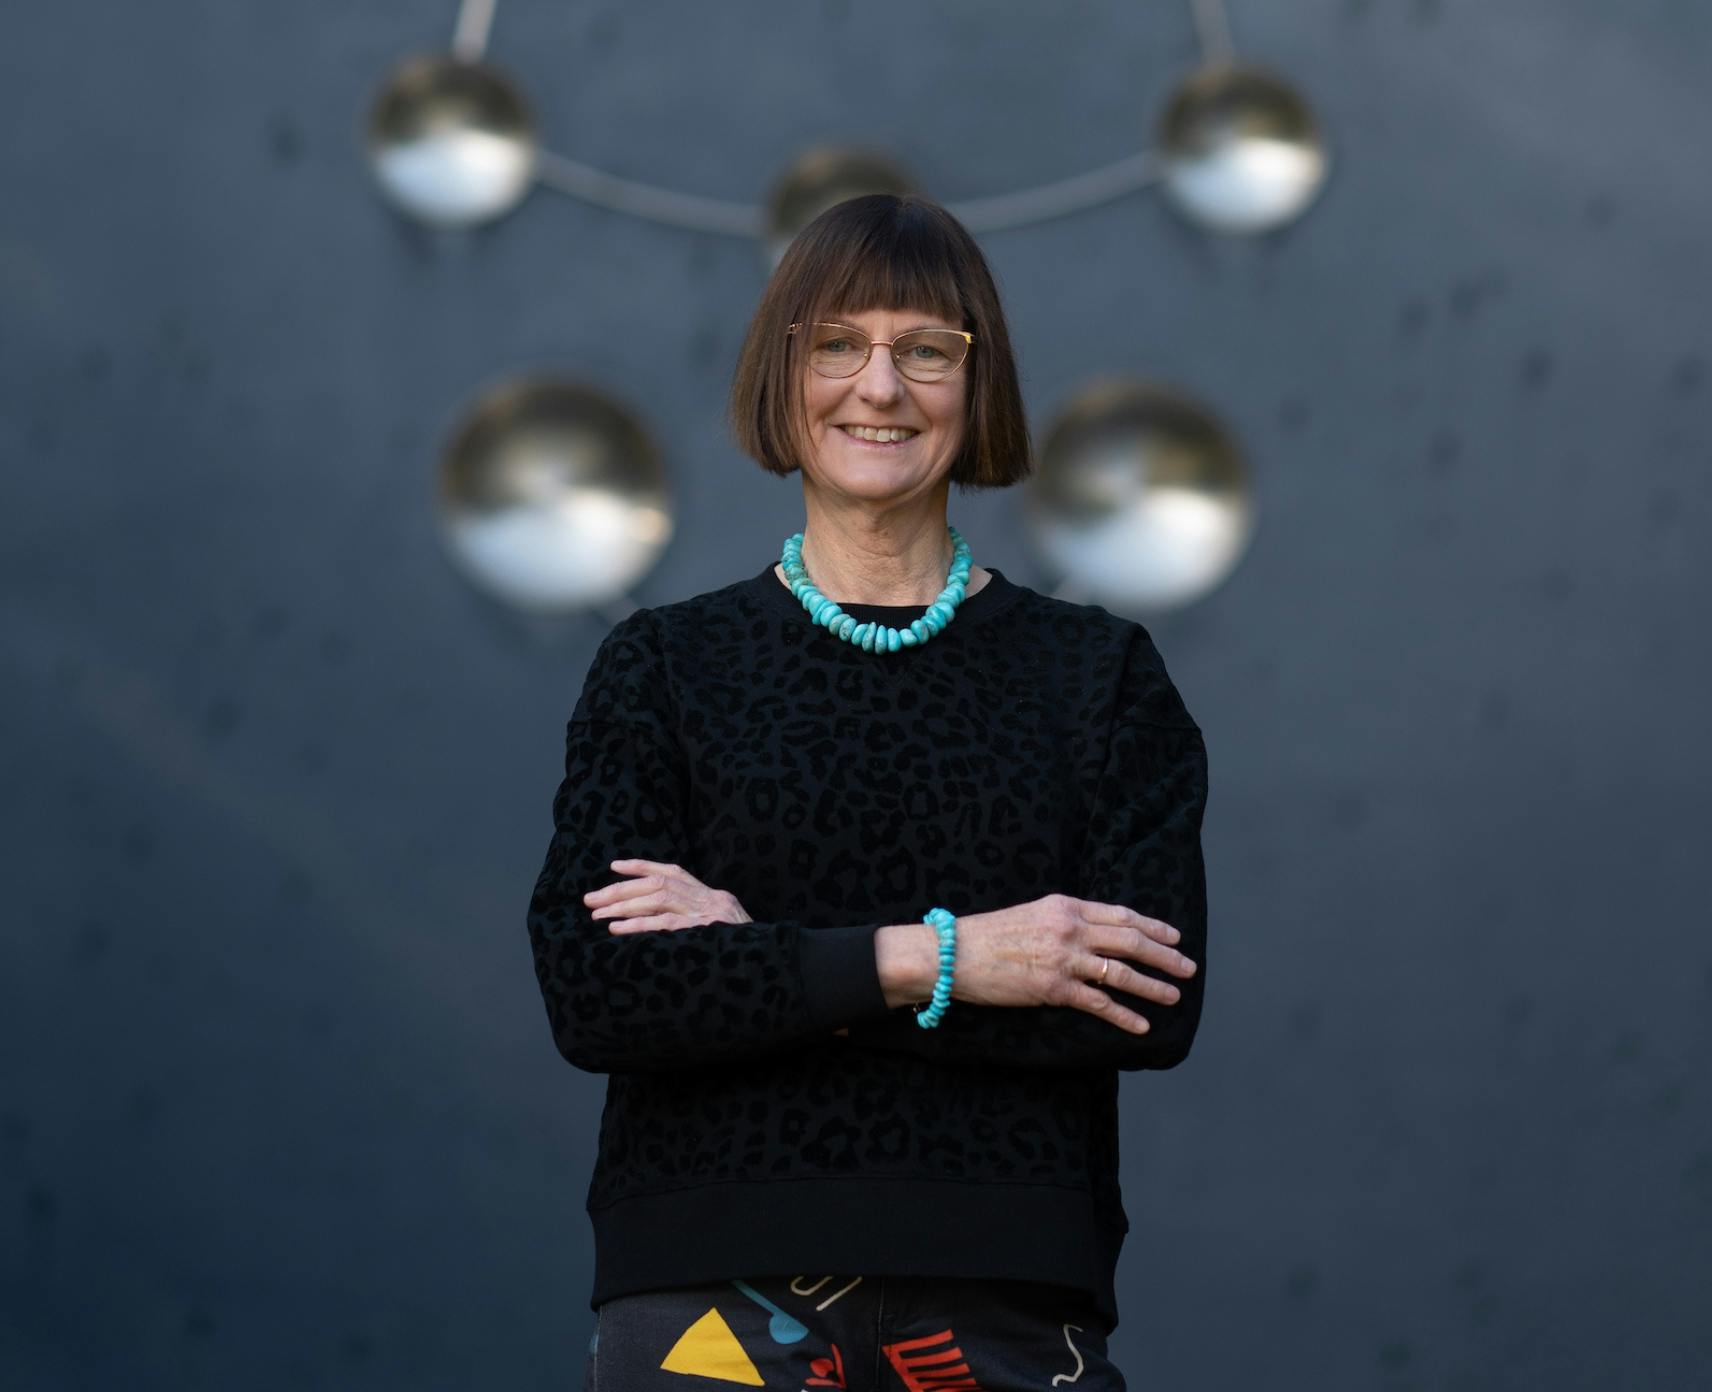 Distinguished Professor Susan Scott poses for photographs at ANU